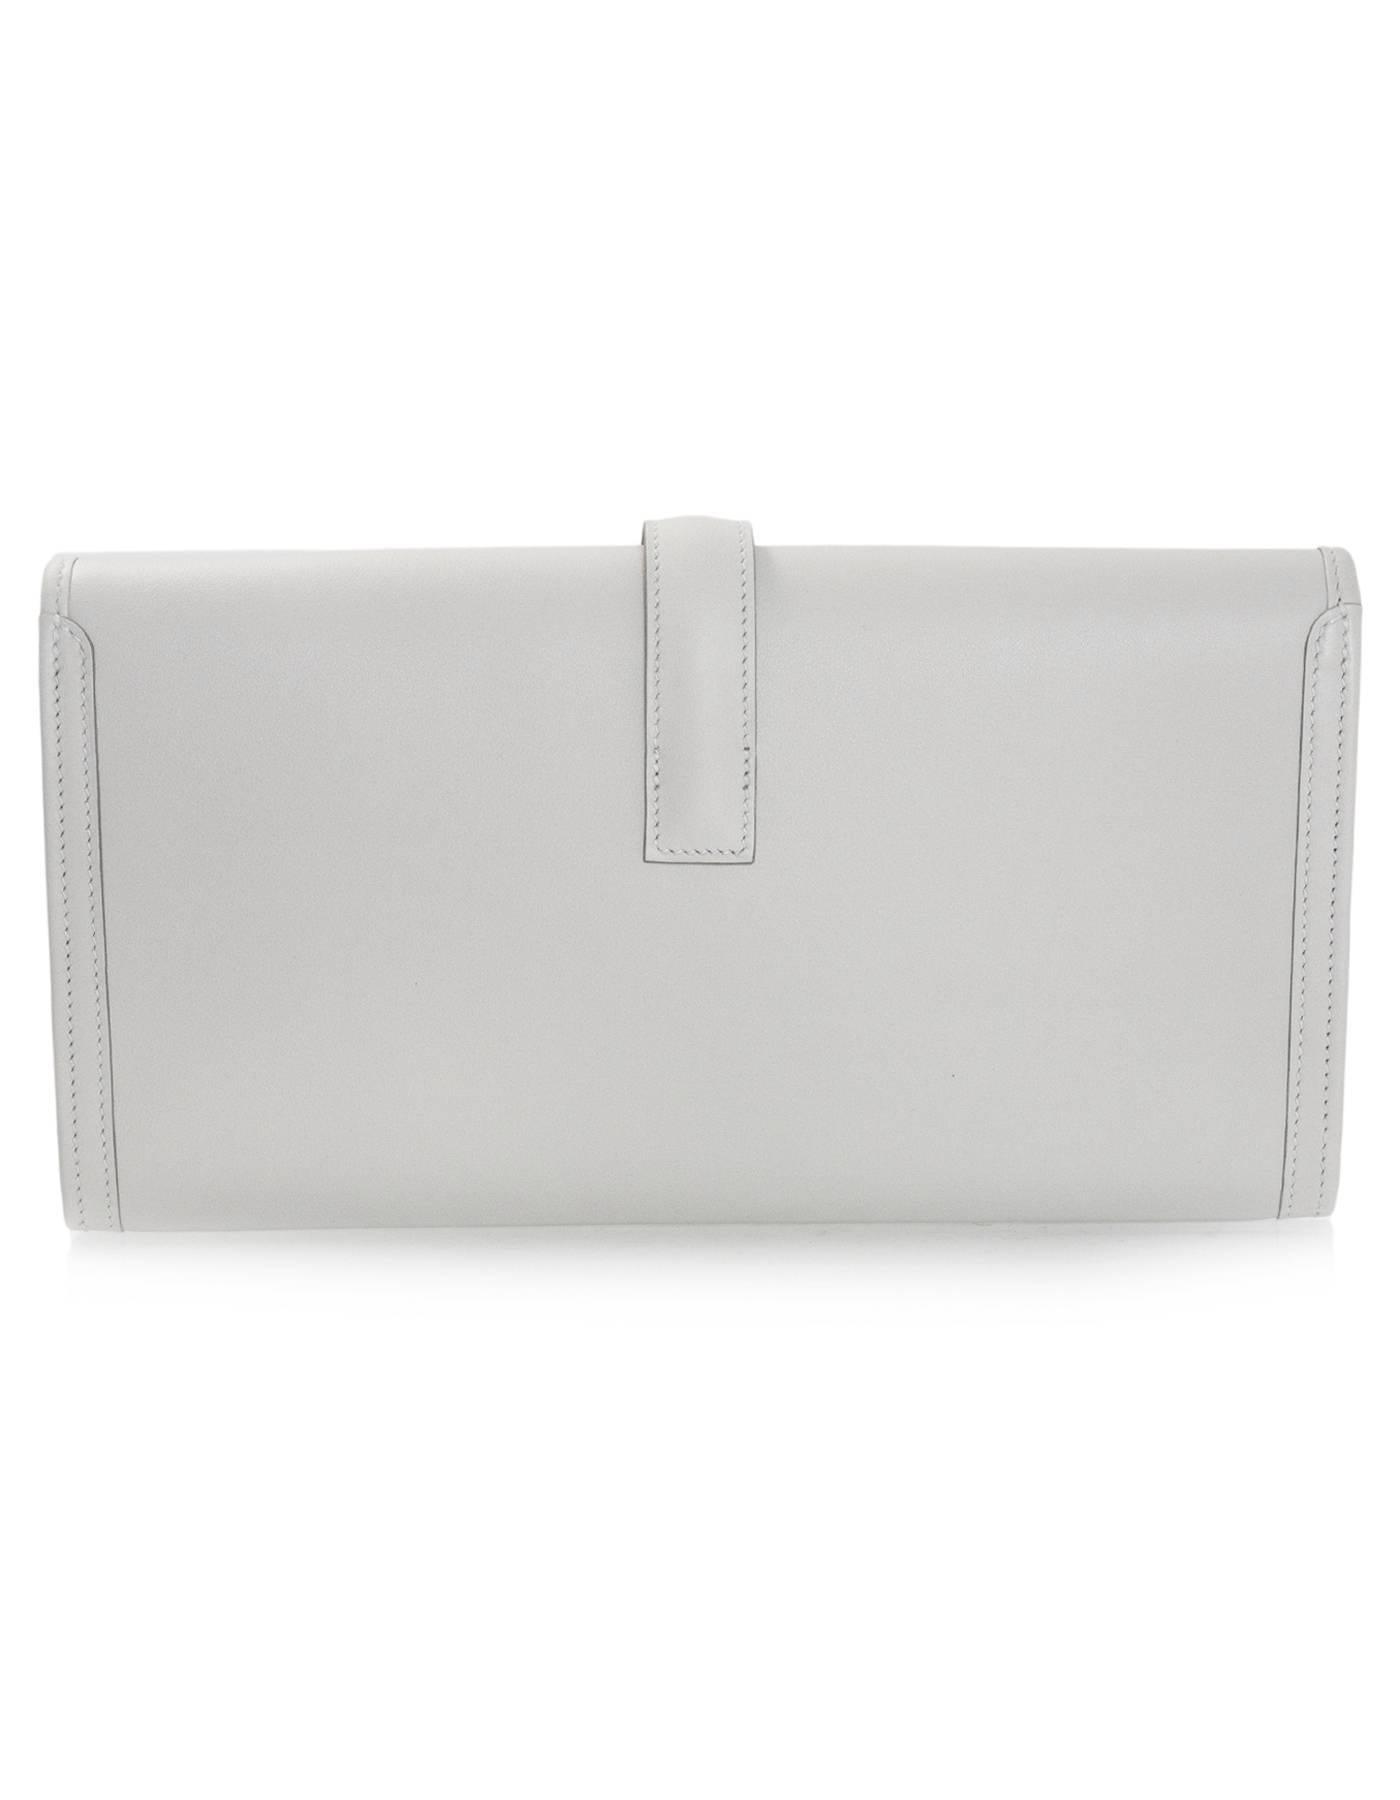 Gray Hermes 2017 Beton Off-White Swift Leather Jige Elan 29cm Clutch Bag